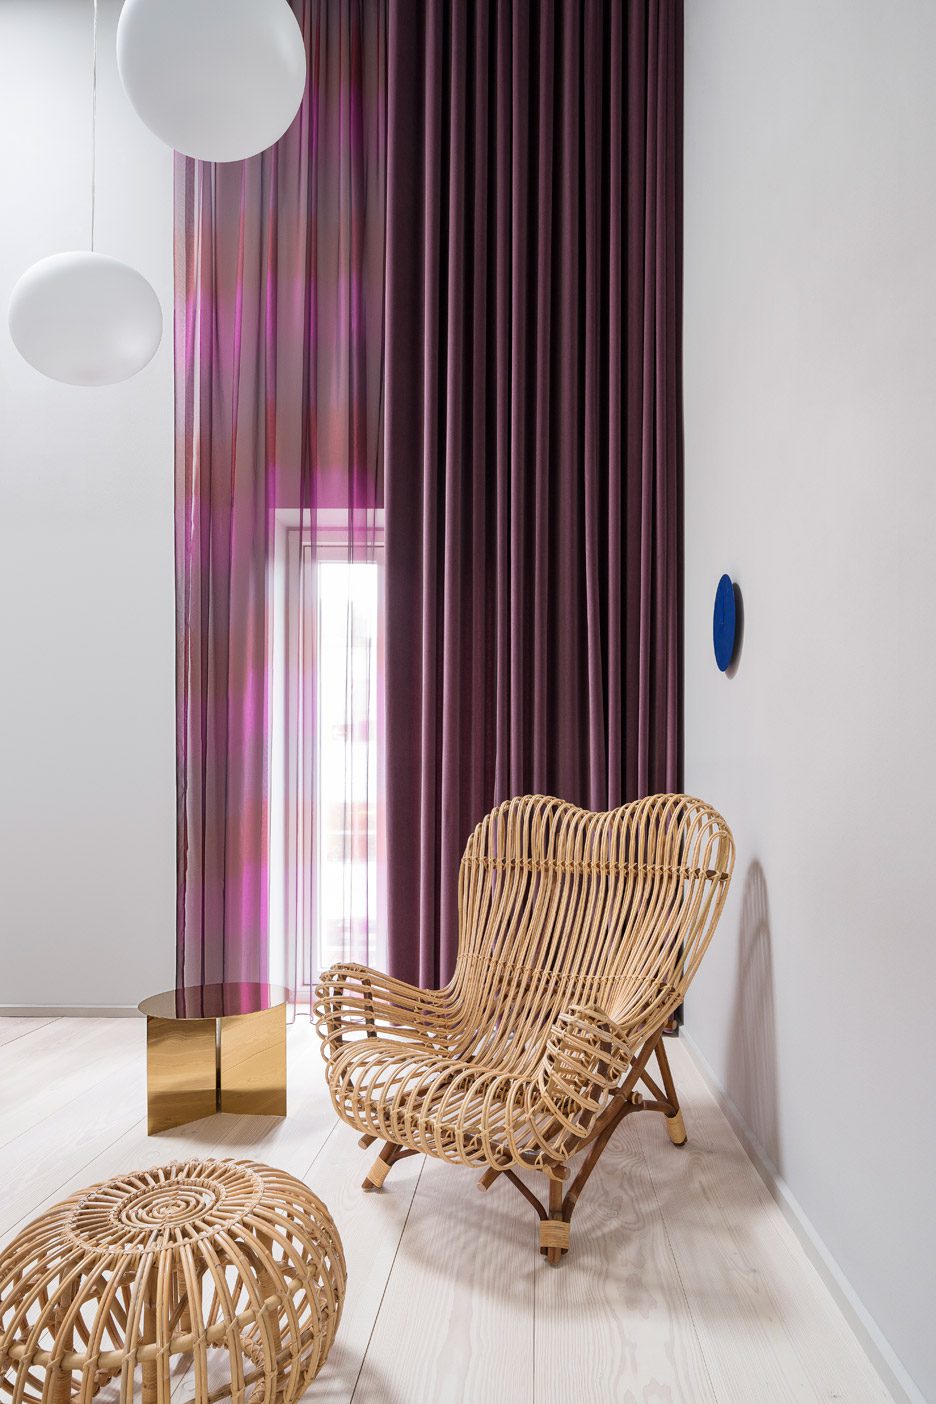 kroyers-plads-apartment-studio-david-thulstrup-interior-architecture-copenhagen-denmark-avoid-scandinavian-furniture-modern-_dezeen_936_15